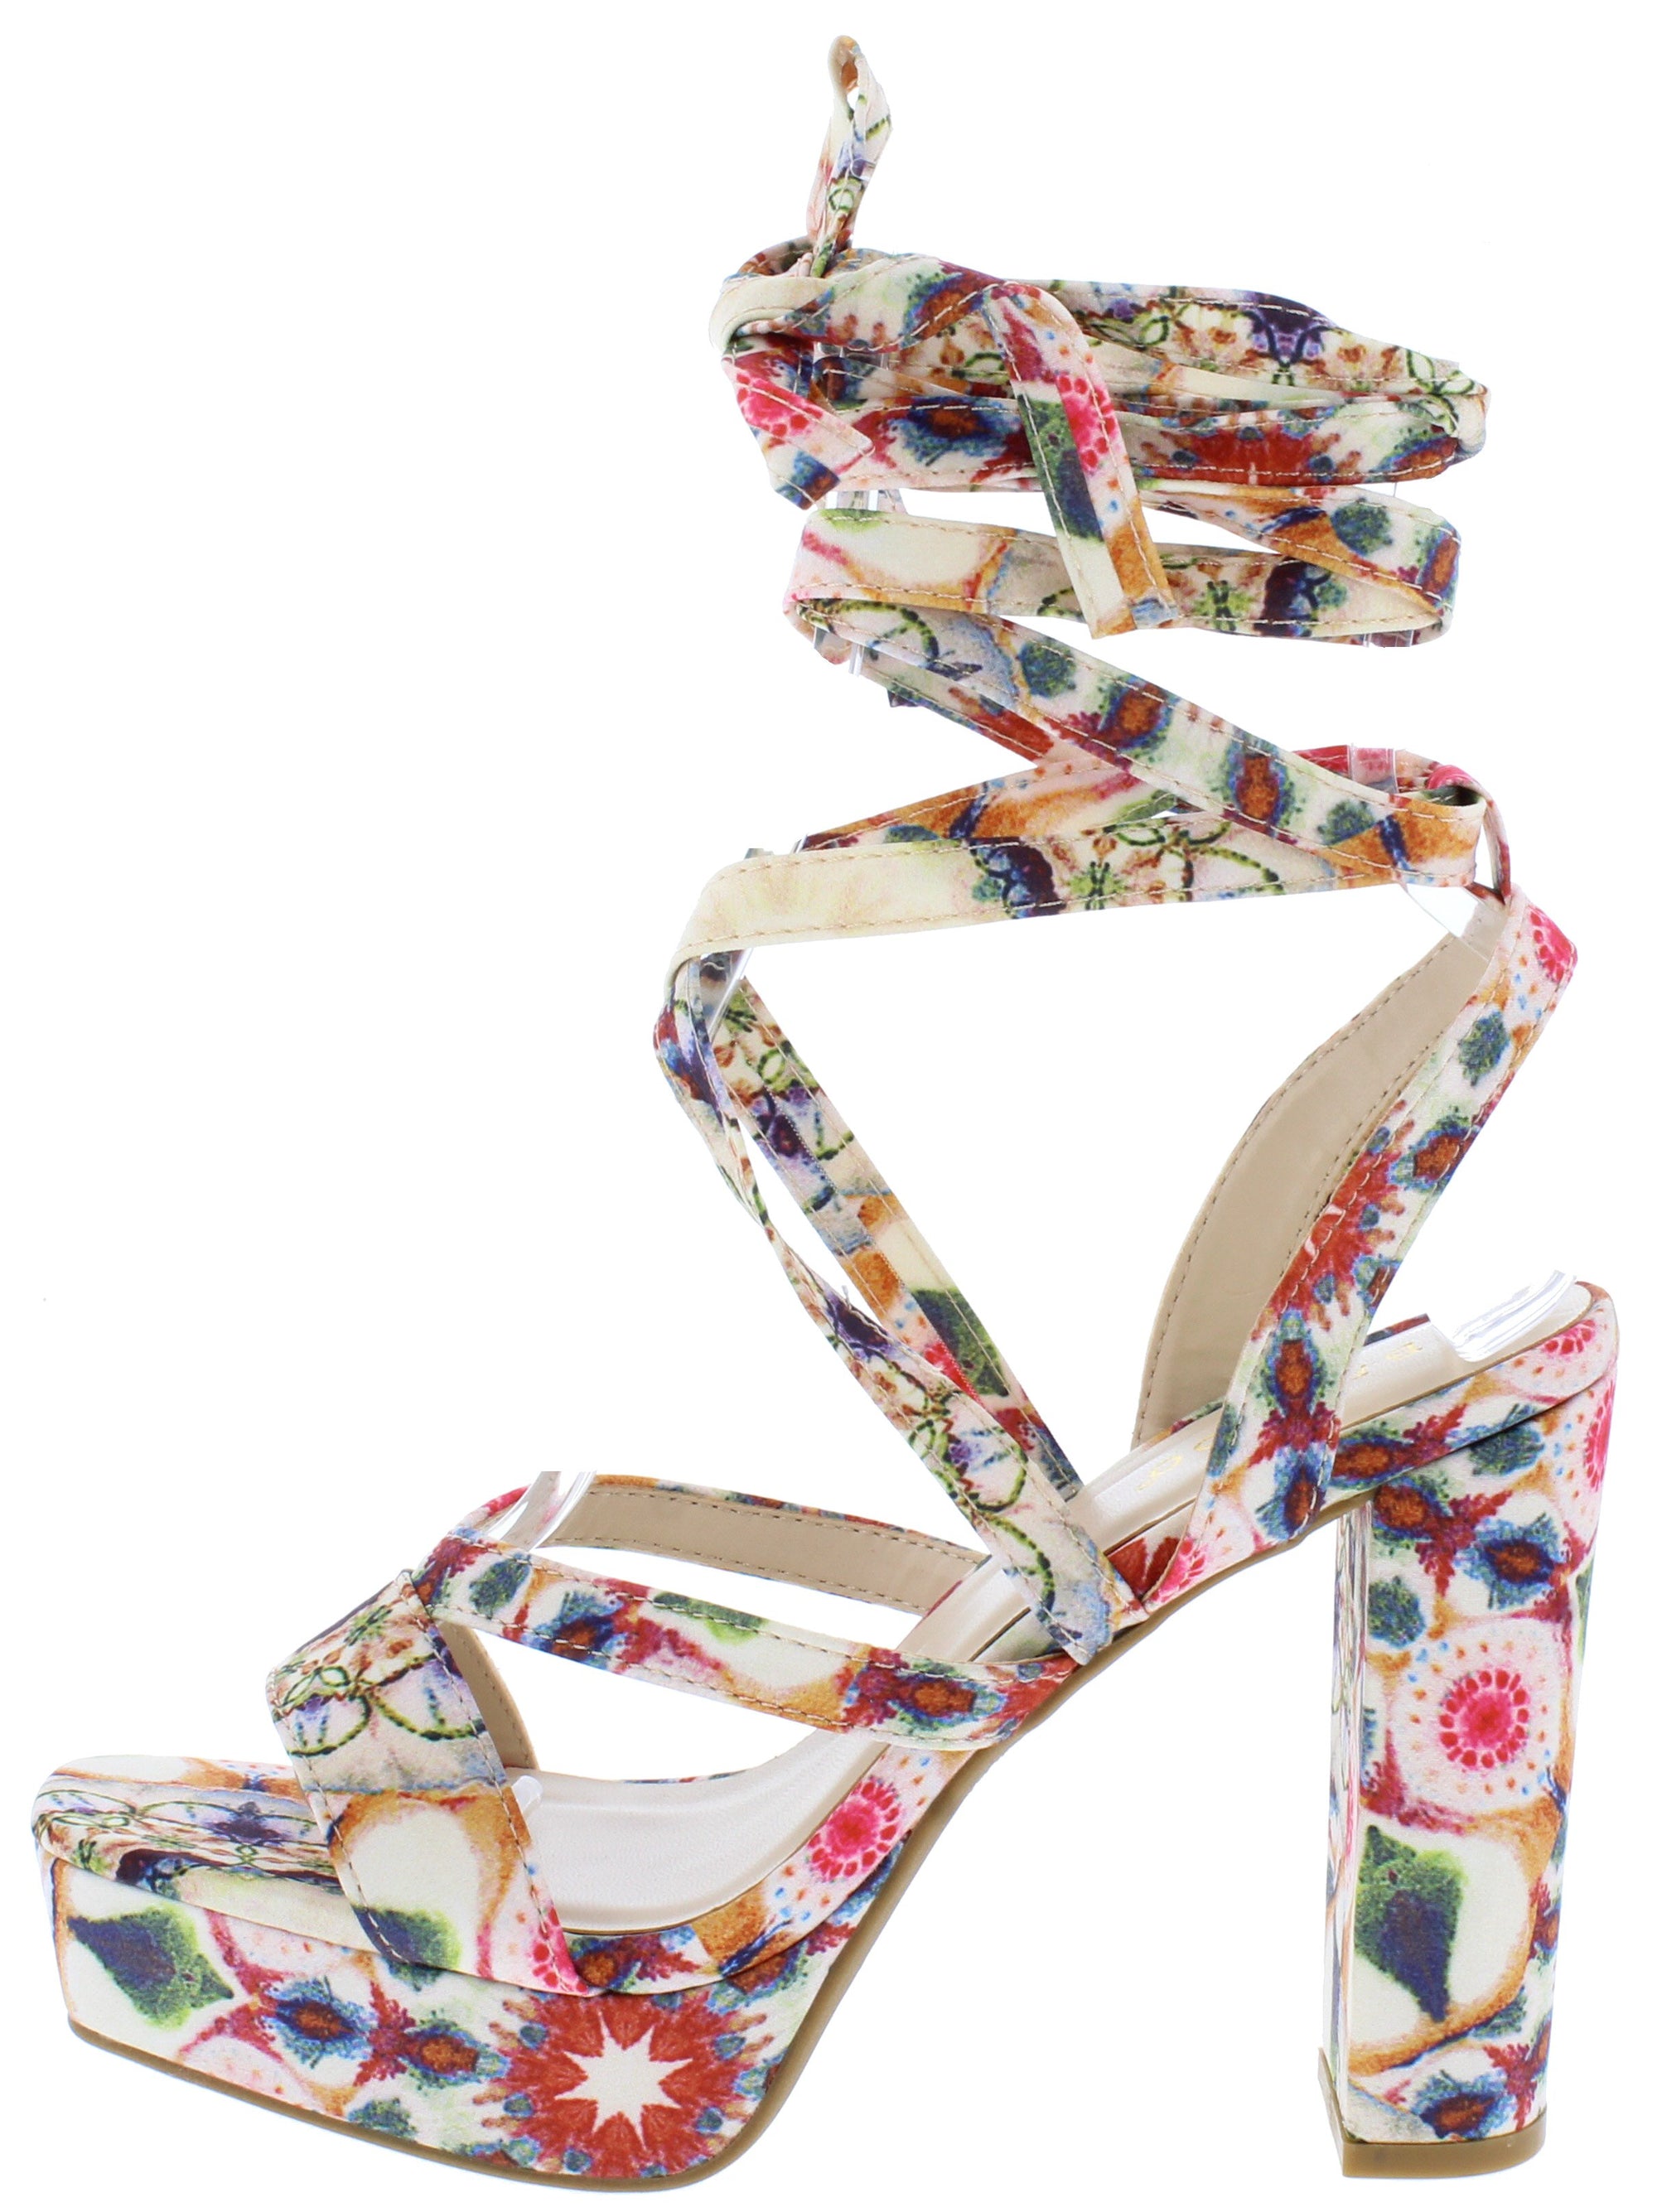 wholesale platform heels